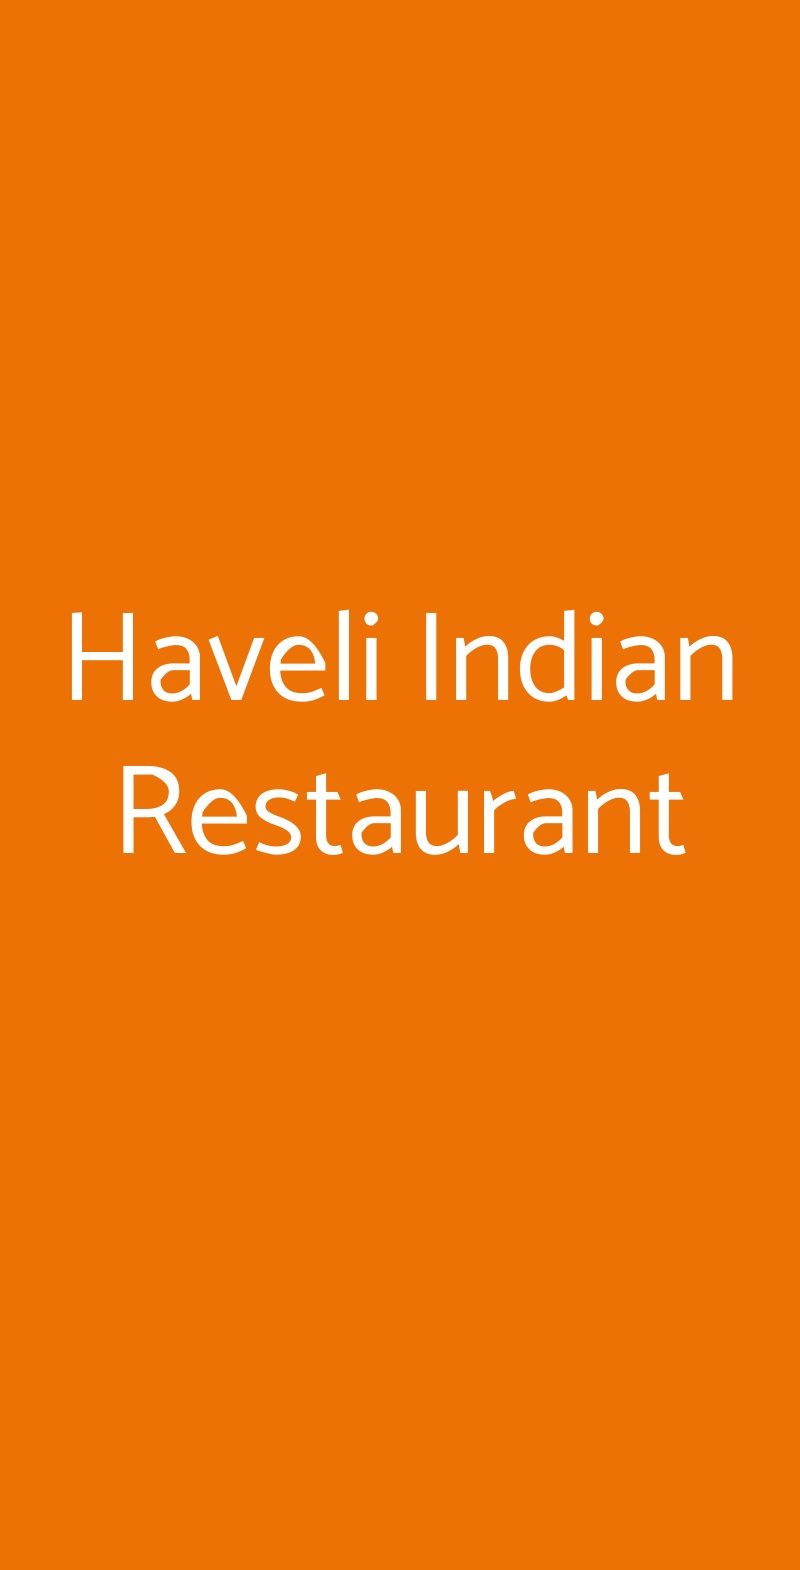 Haveli Indian Restaurant Firenze menù 1 pagina